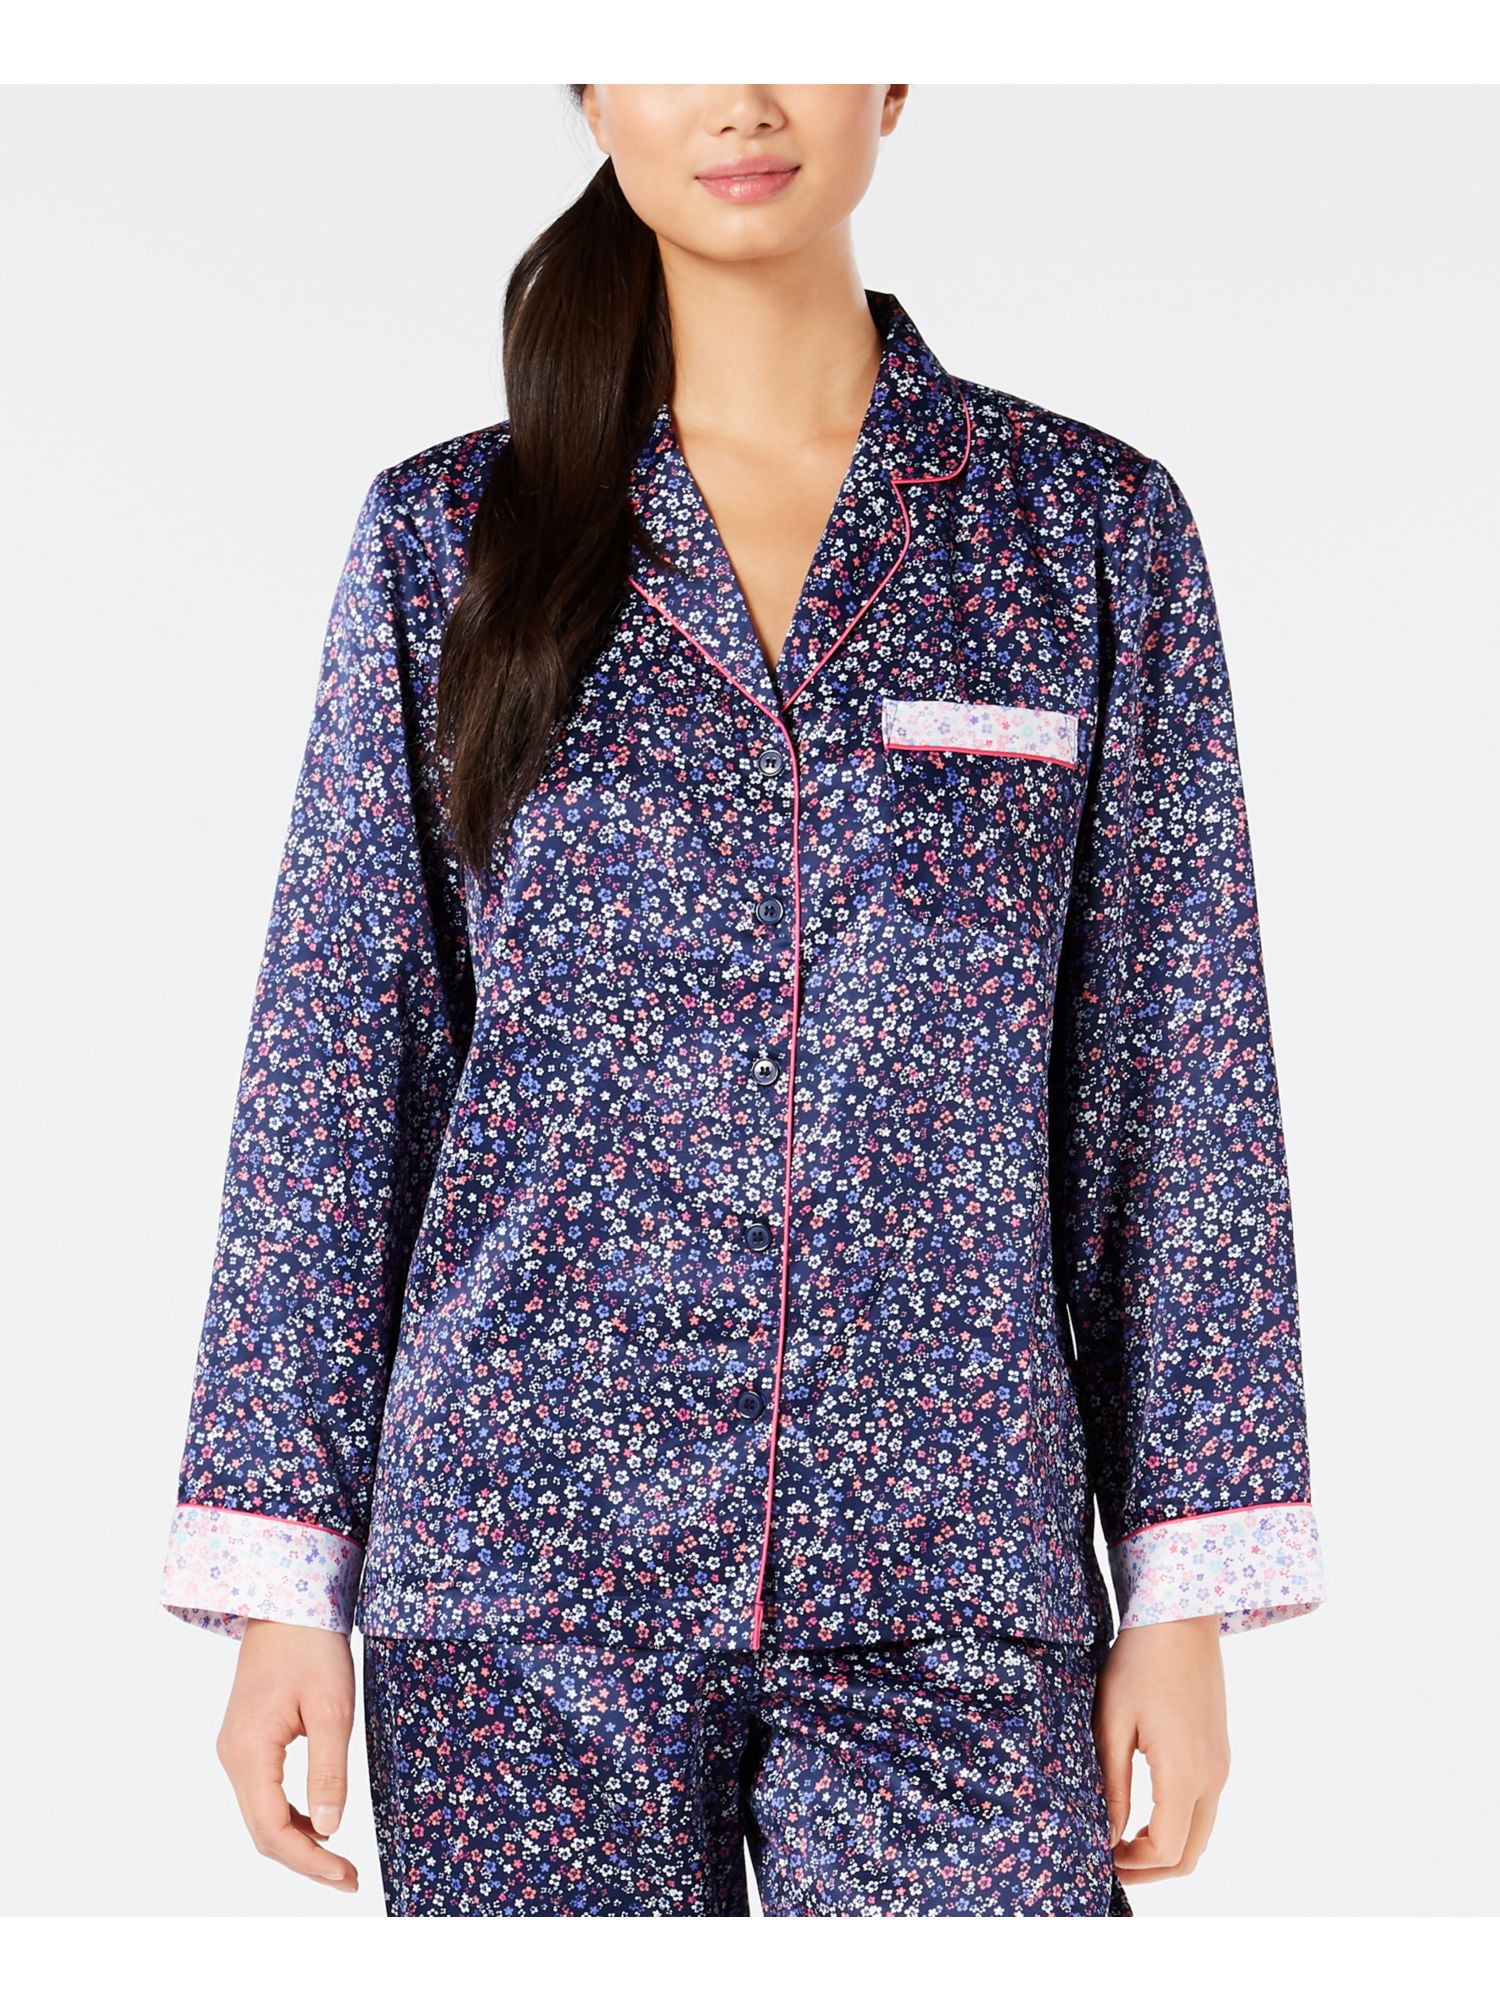 CHARTER CLUB Intimates Navy Floral Sleepwear Shirt Size: L 